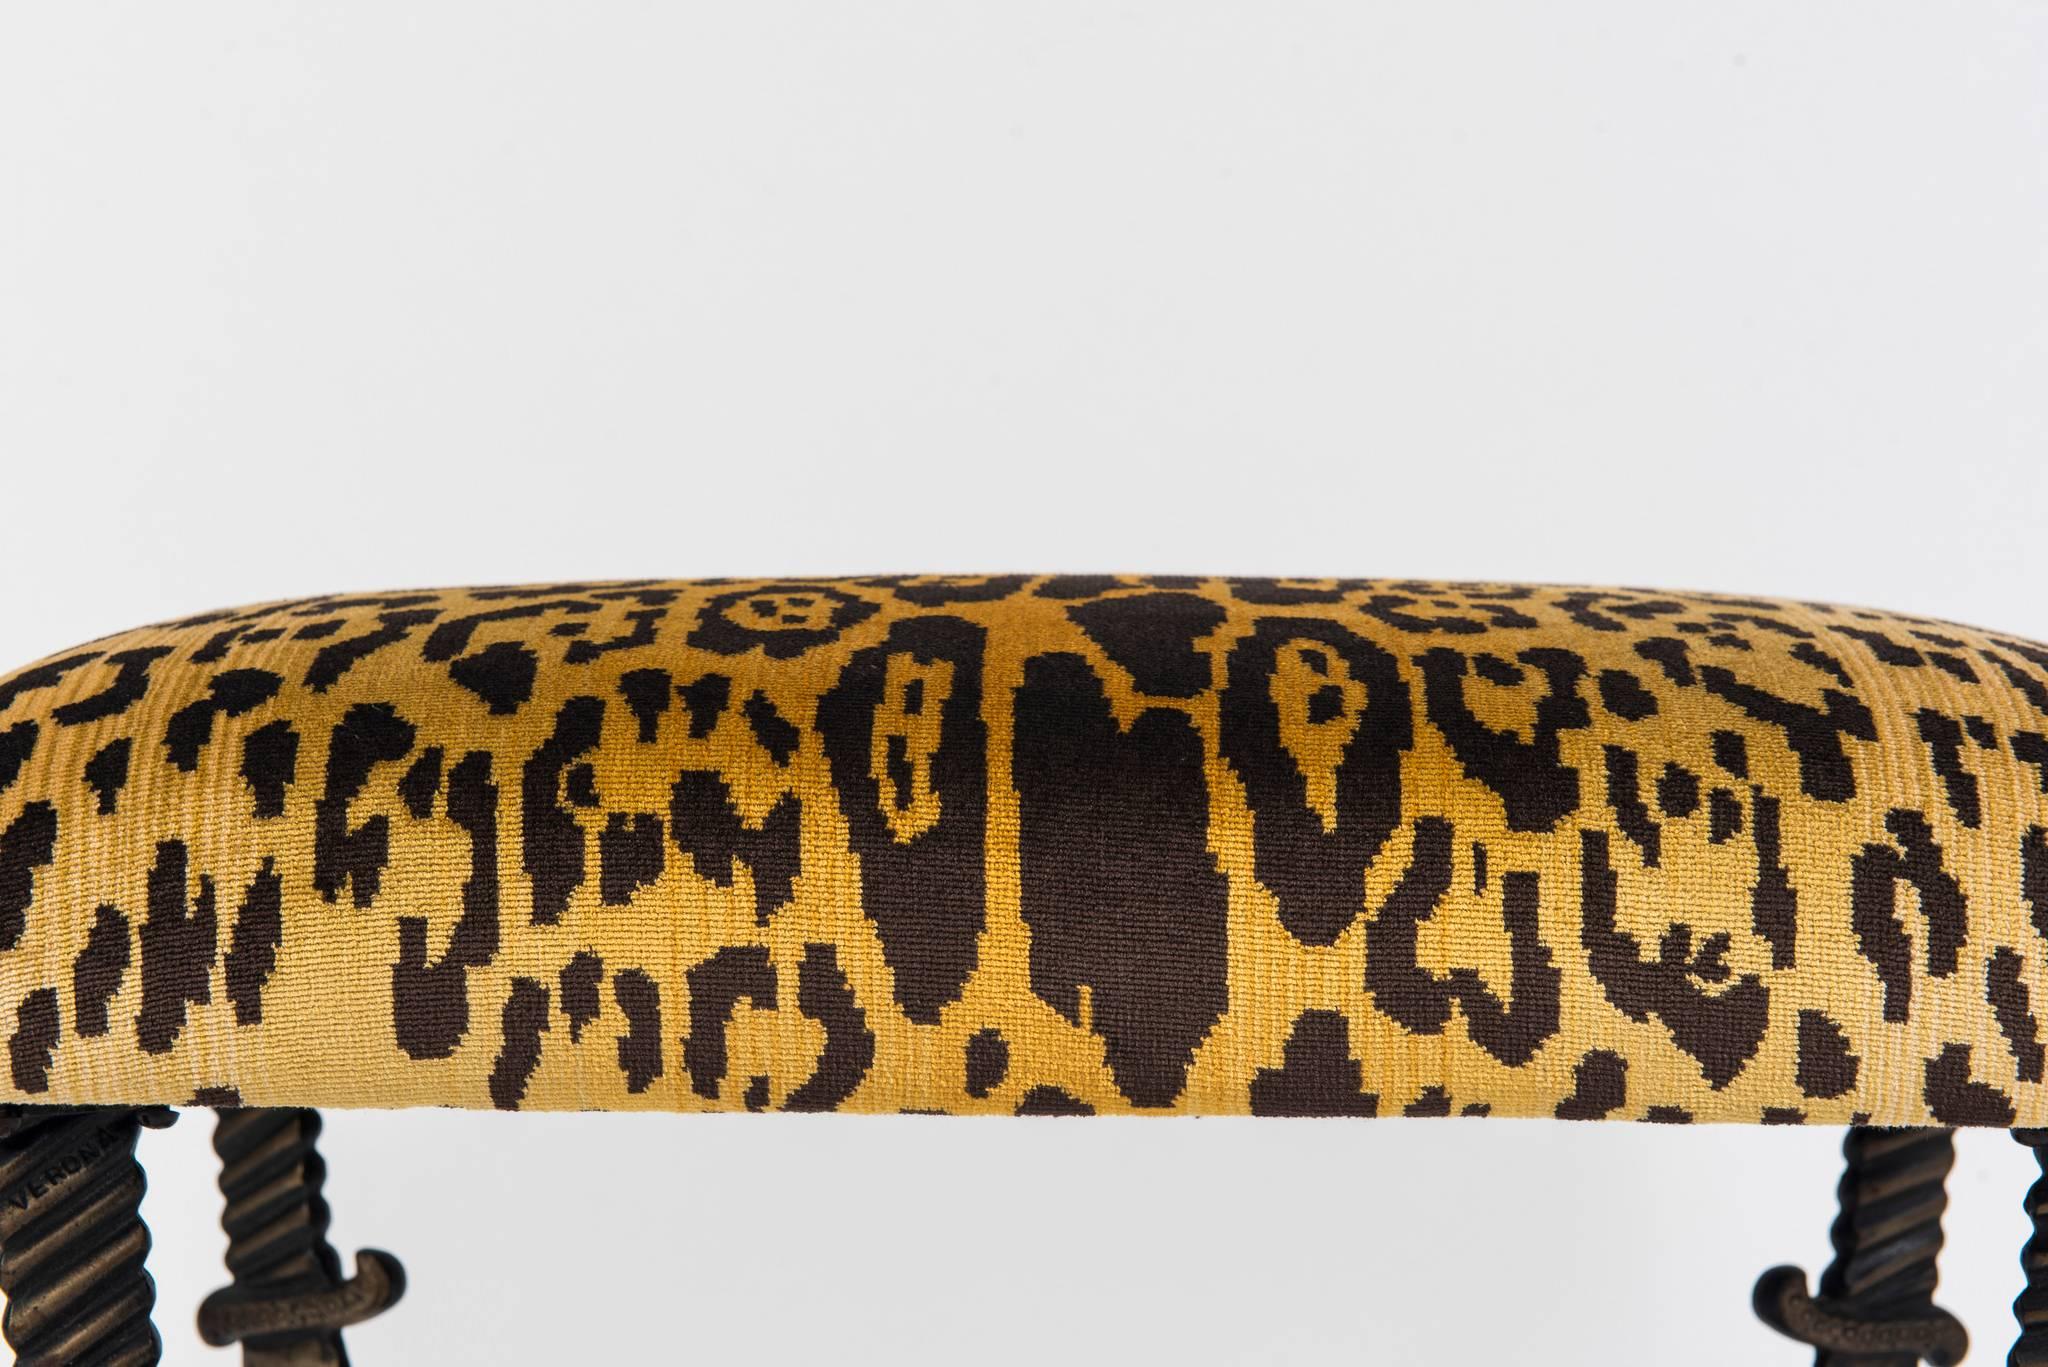 European Iron Sword Bench with Leopard Silk Velvet Seat